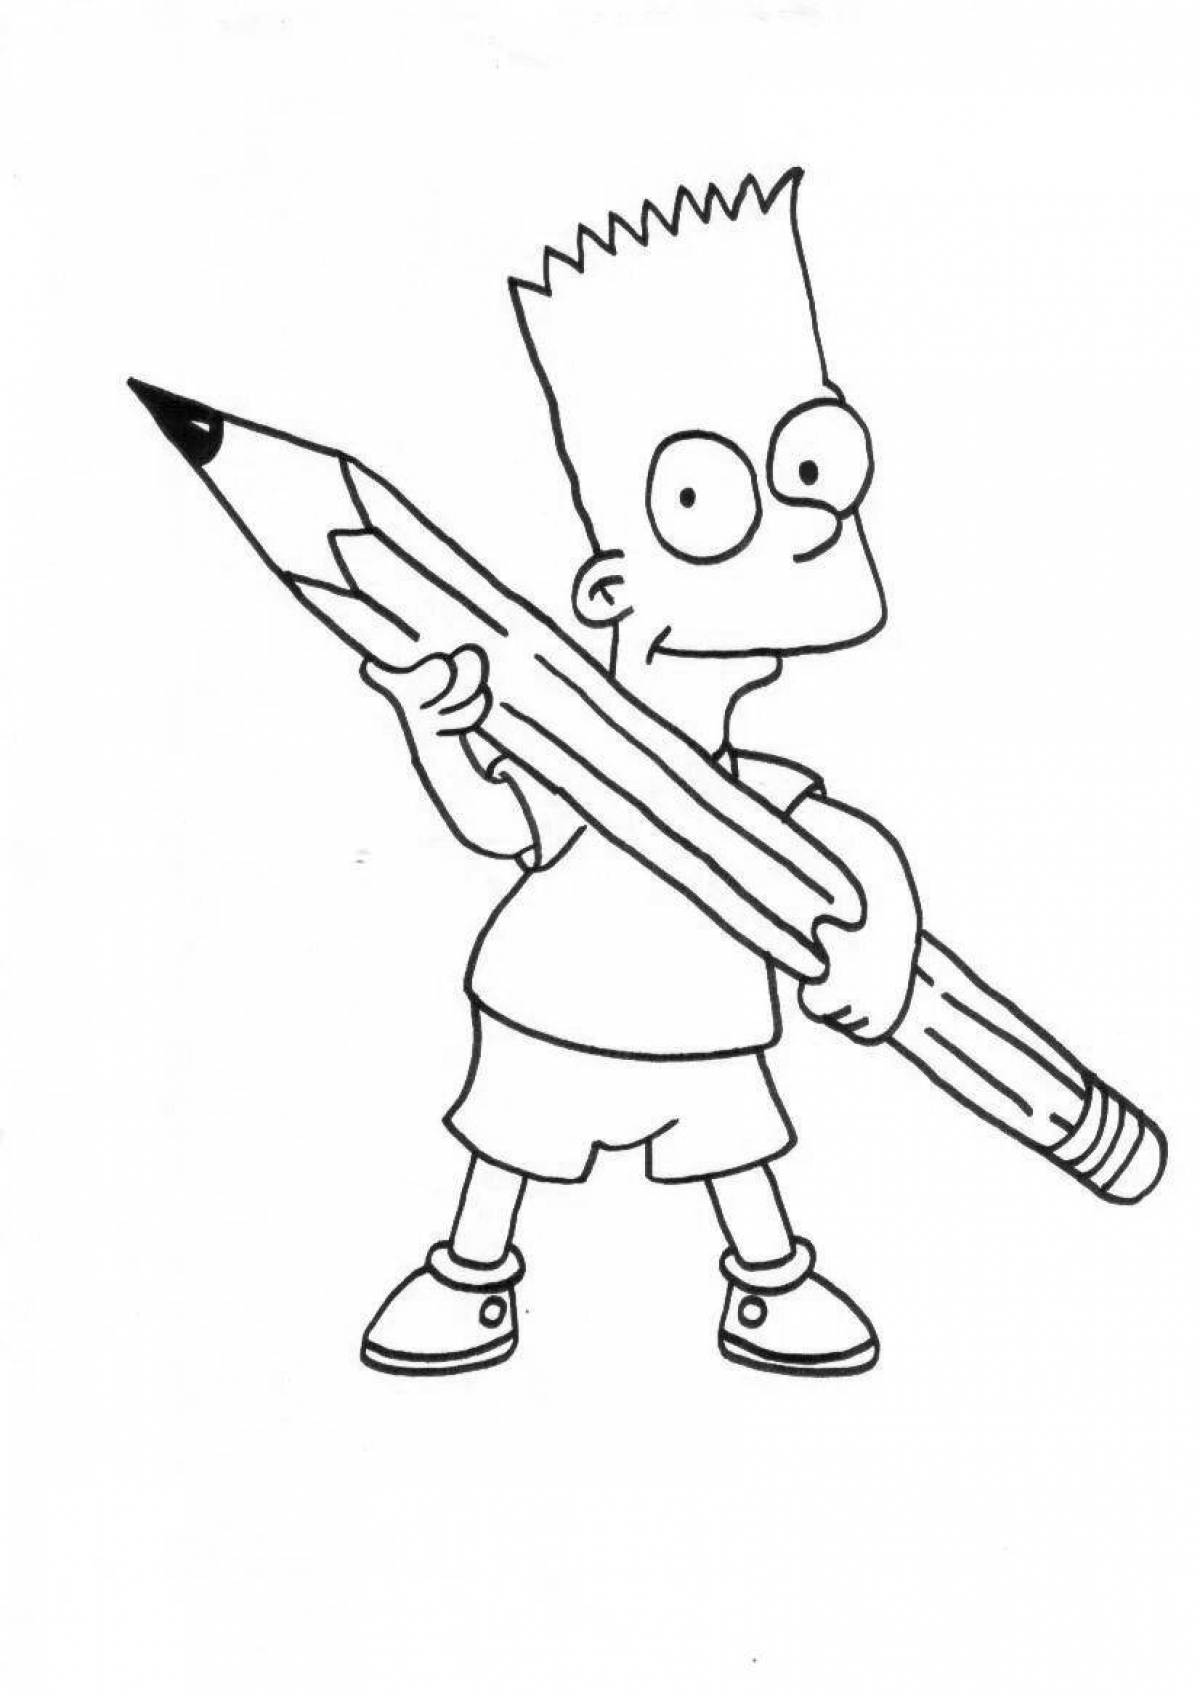 Bart's crazy coloring book